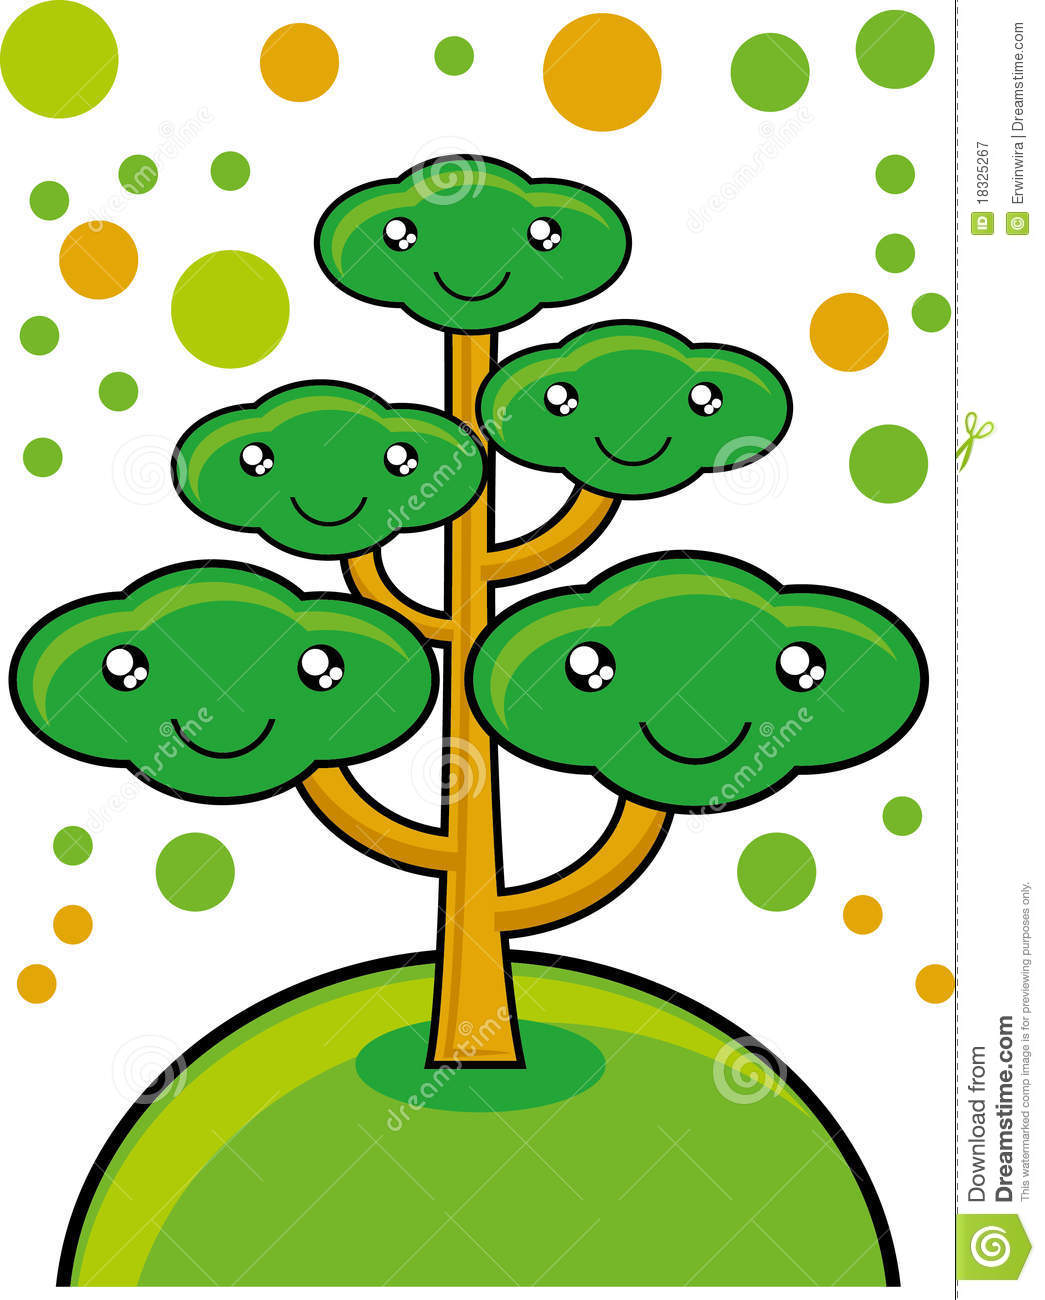 Go Green Tree Royalty Free Stock Photography   Image  18325267